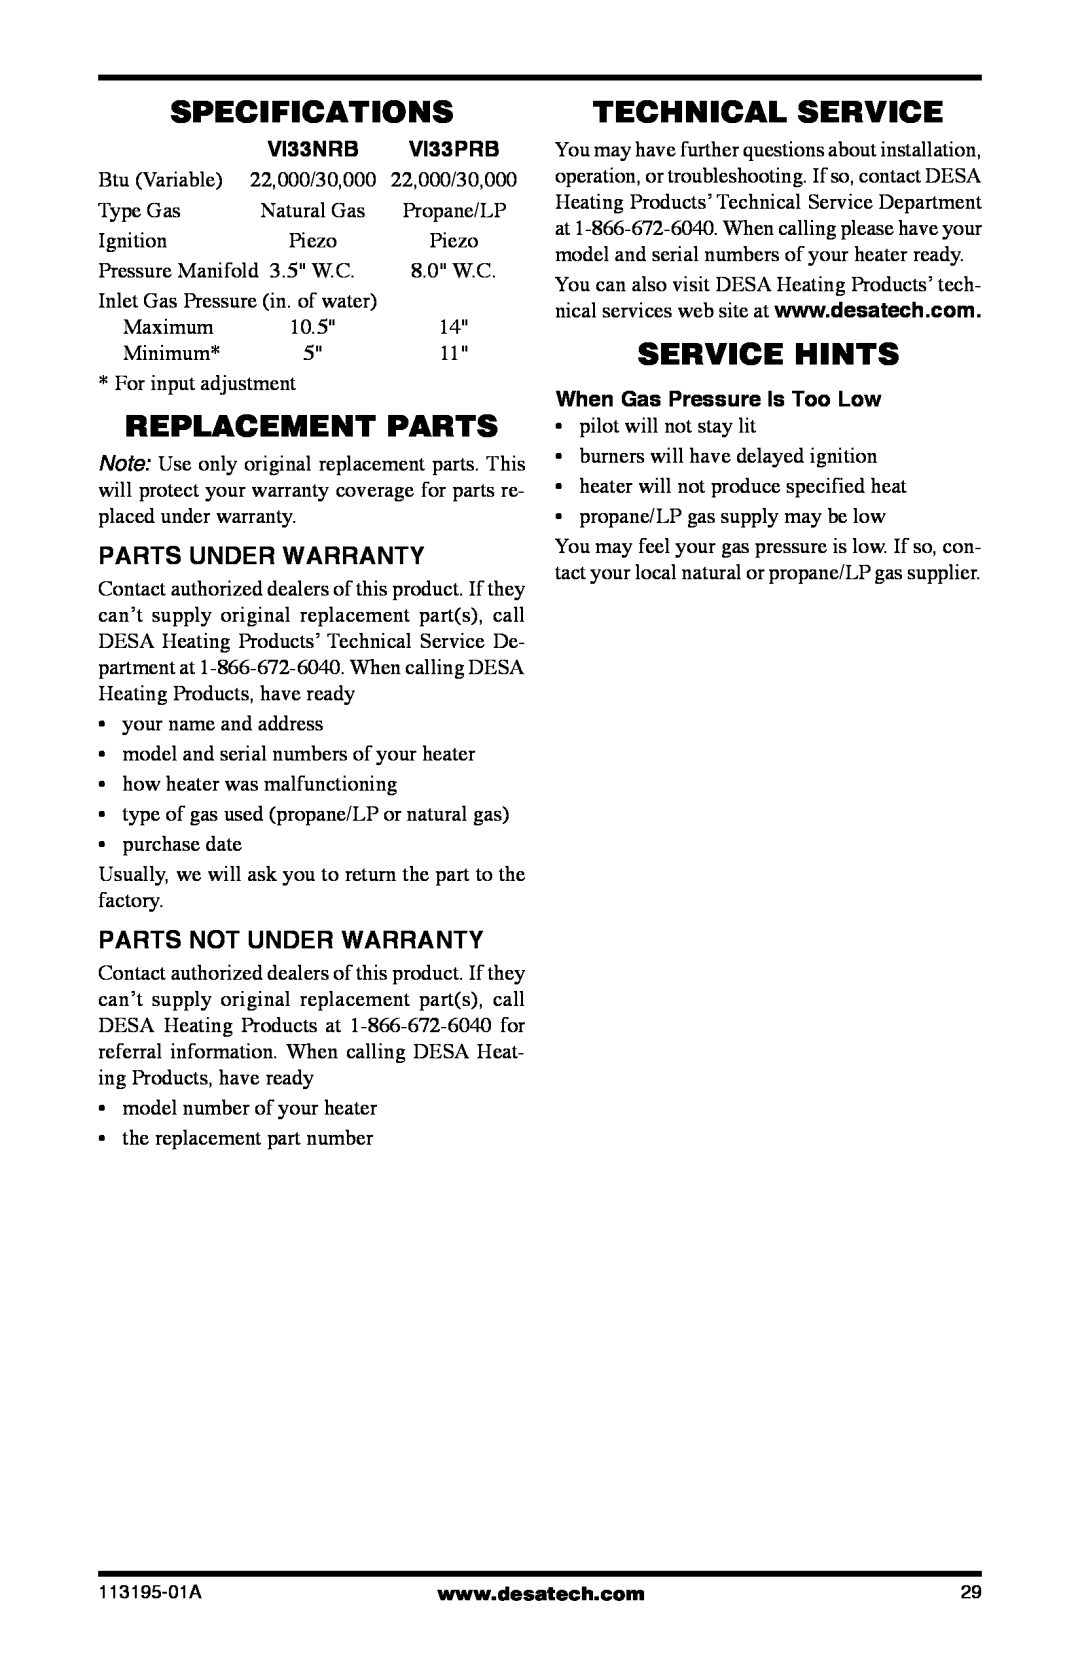 Desa VI33NRB installation manual Parts Under Warranty, Parts Not Under Warranty, VI33PRB, When Gas Pressure Is Too Low 